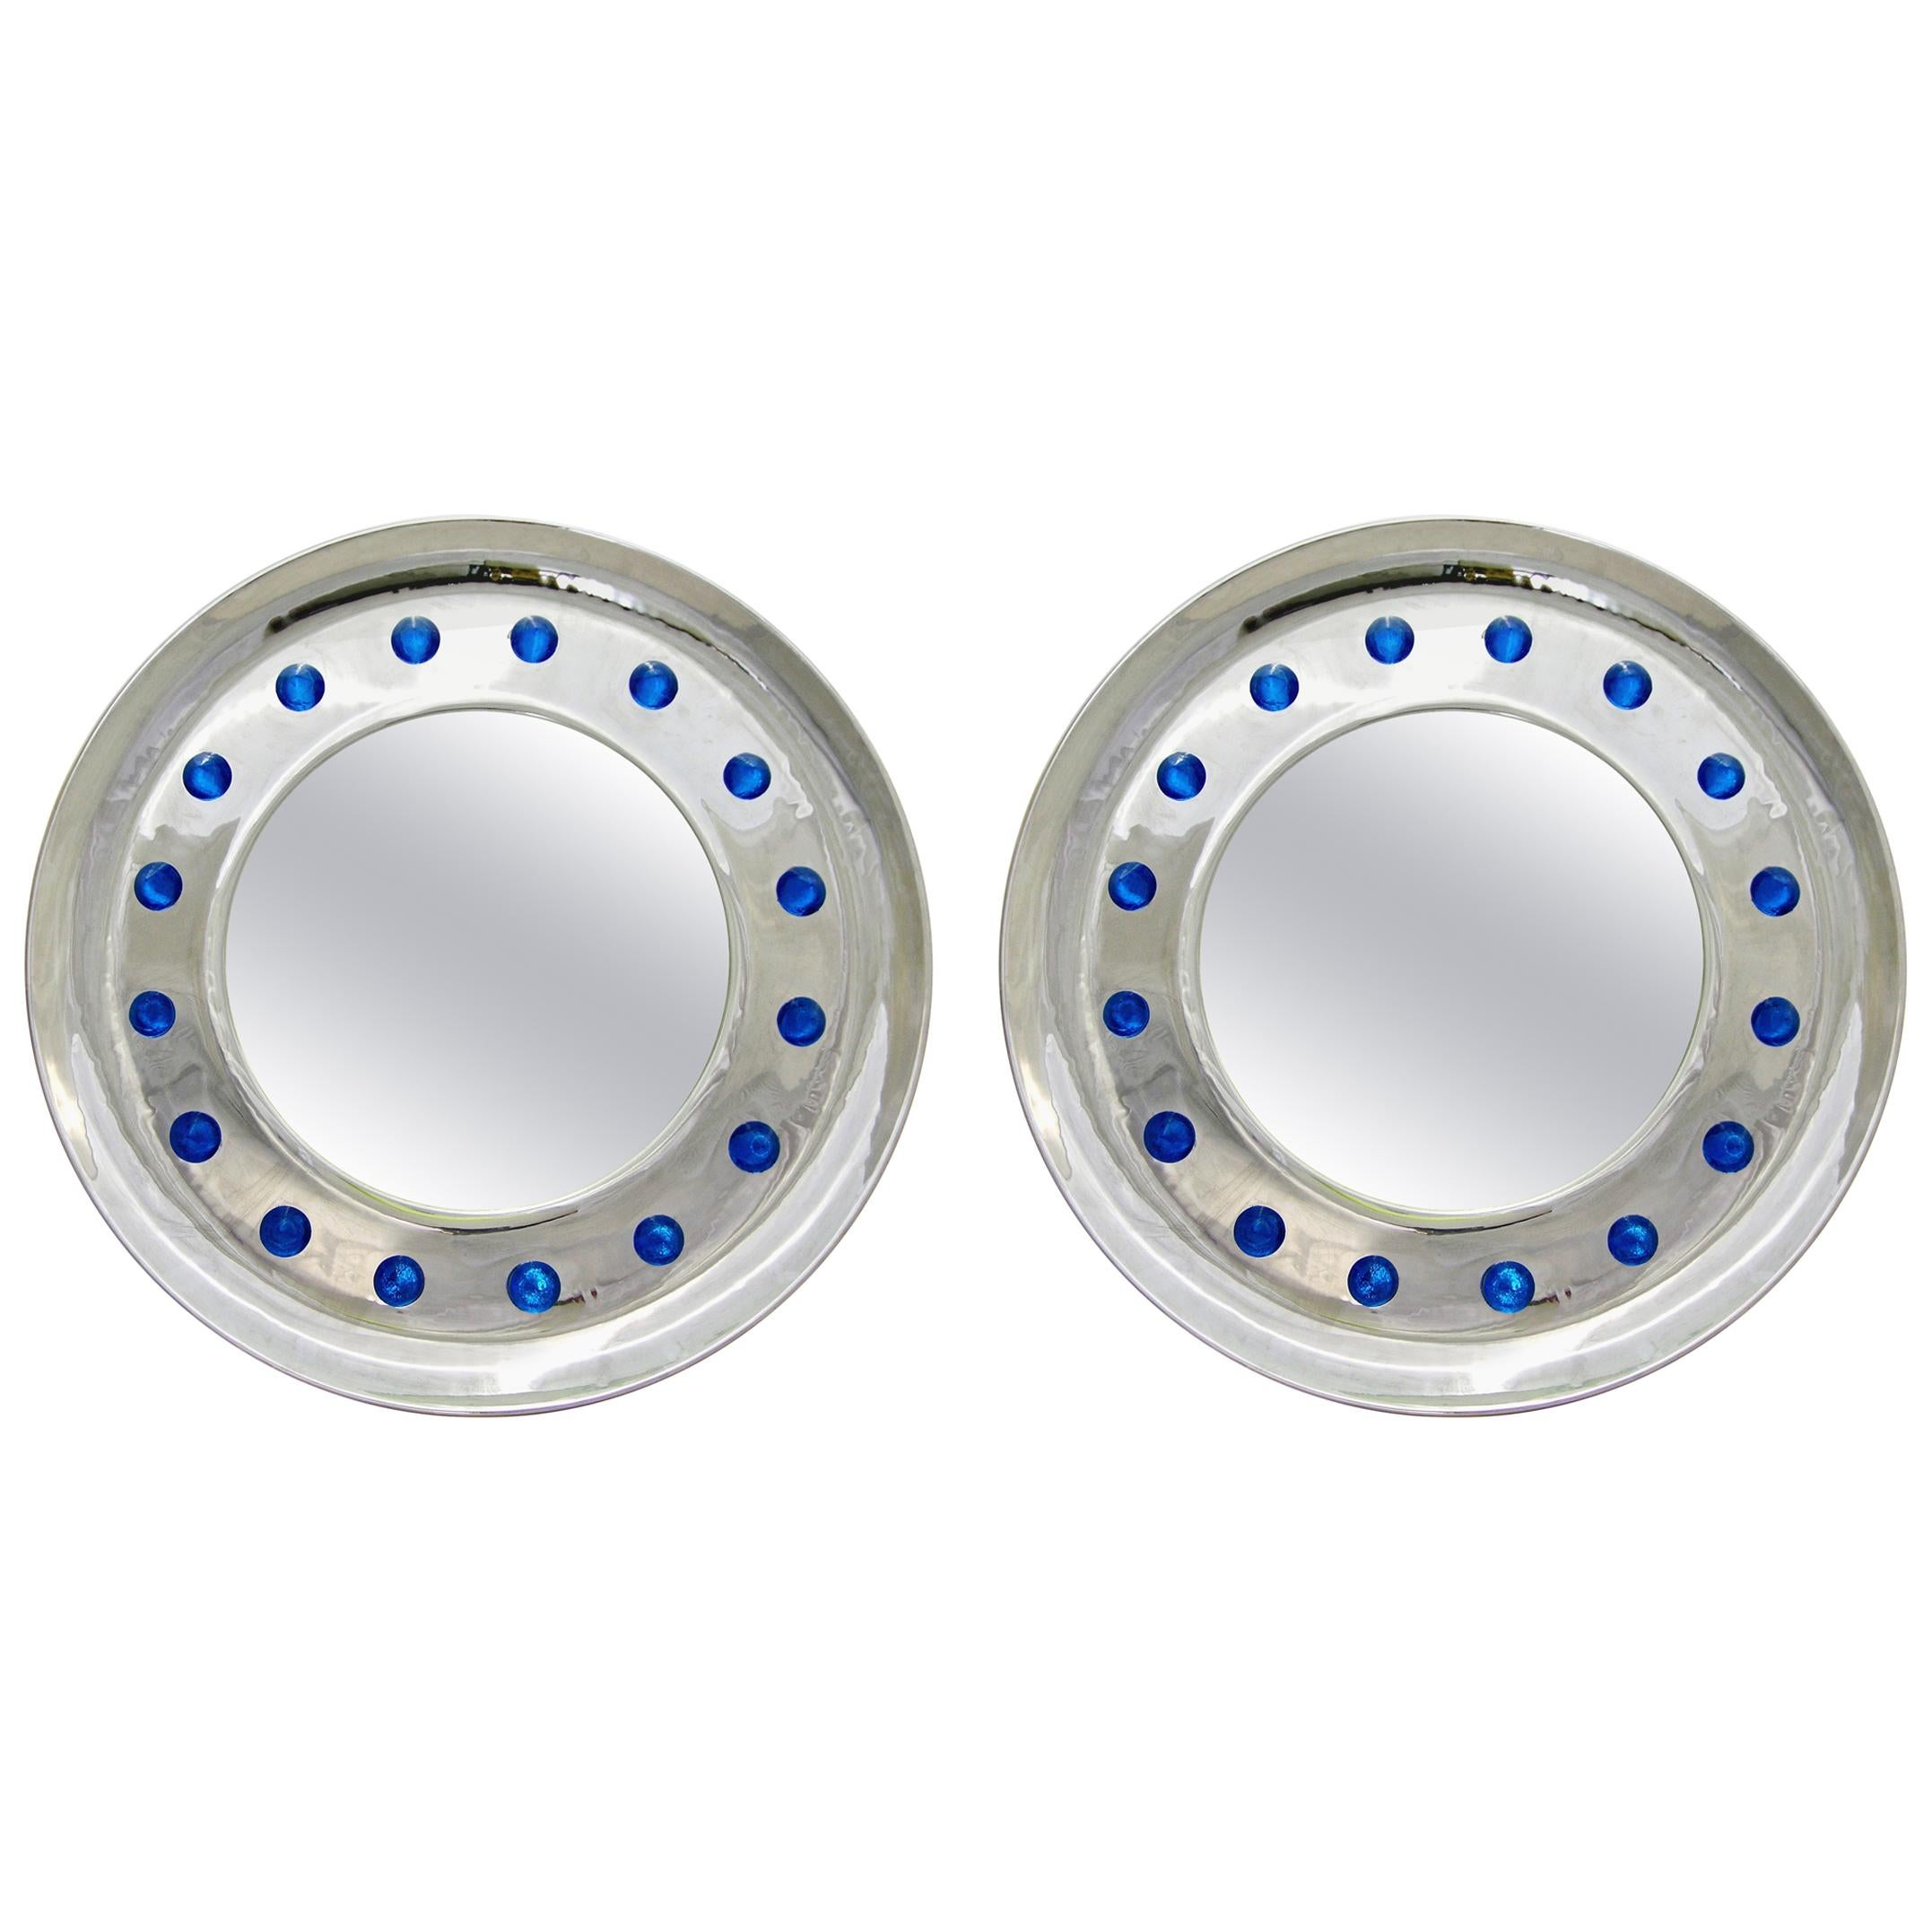 Paire italienne de miroirs ronds modernes en nickel avec des bijoux en verre de Murano bleu